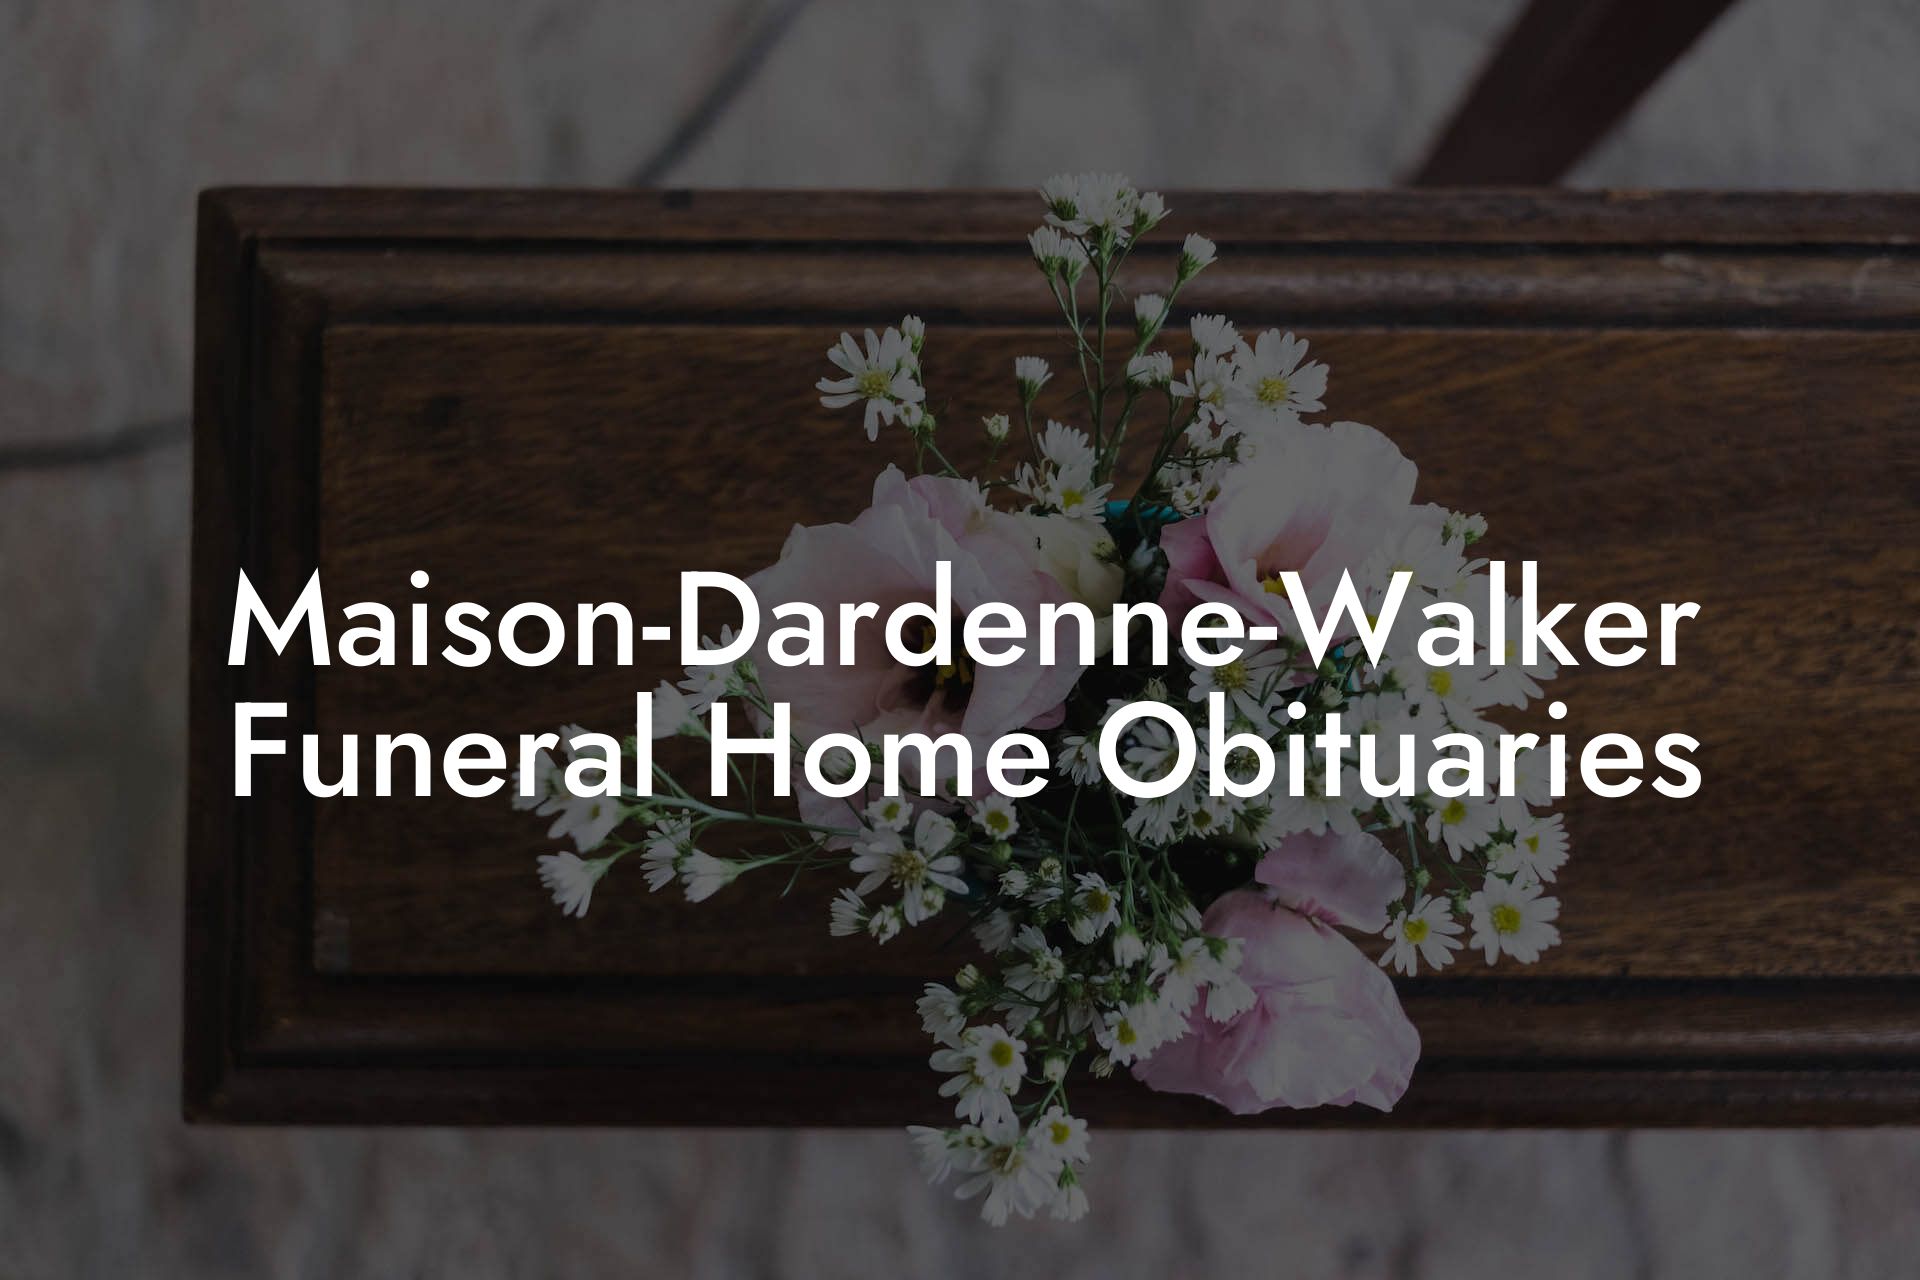 Maison-Dardenne-Walker Funeral Home Obituaries